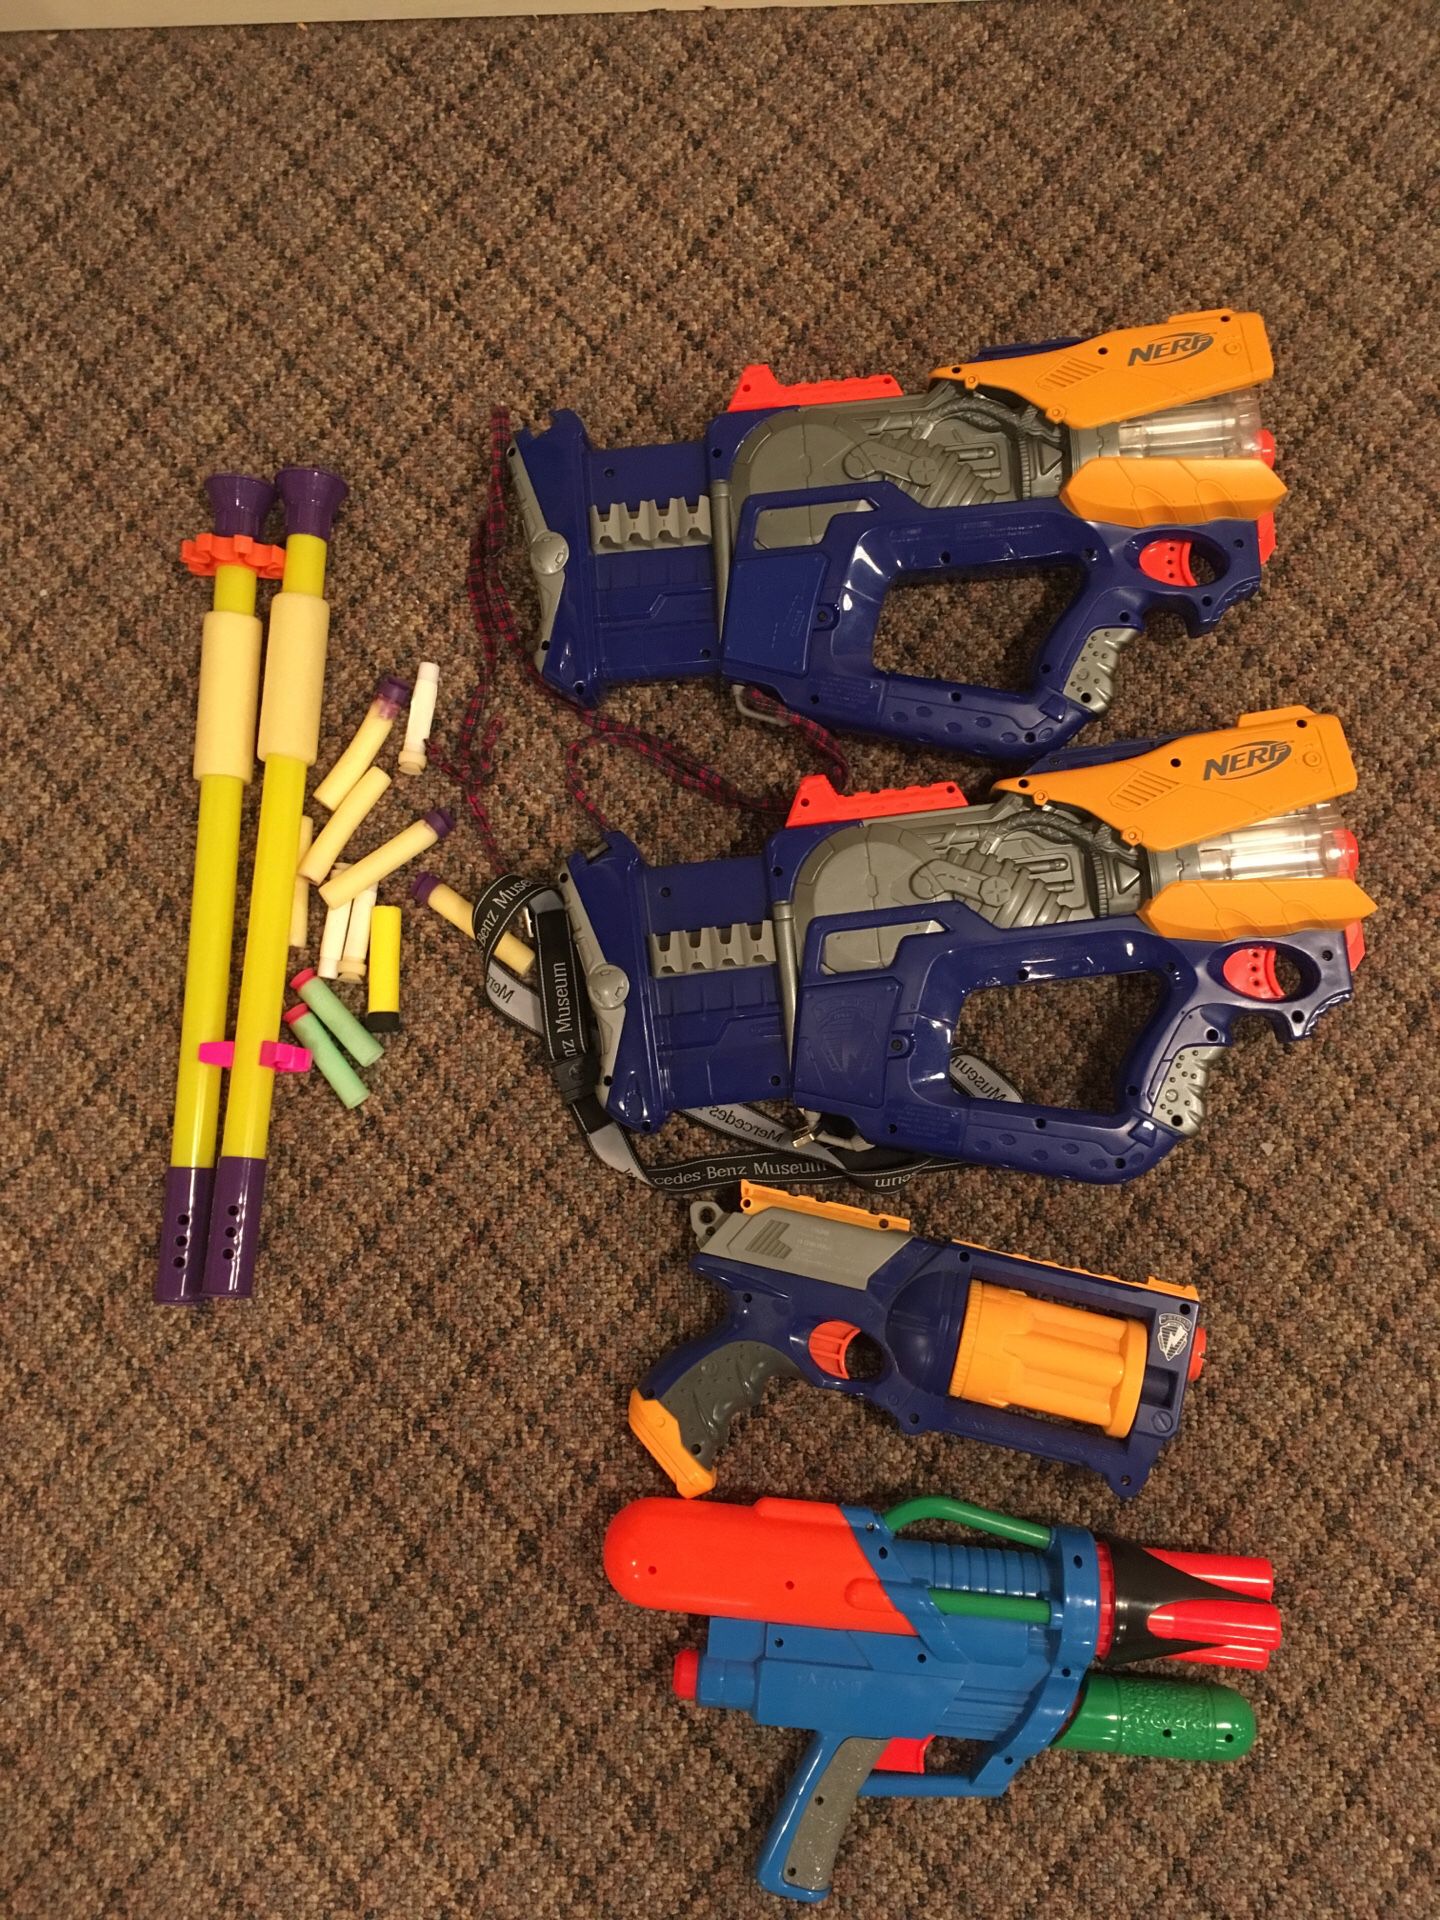 Nerf guns - 4 guns and accessories